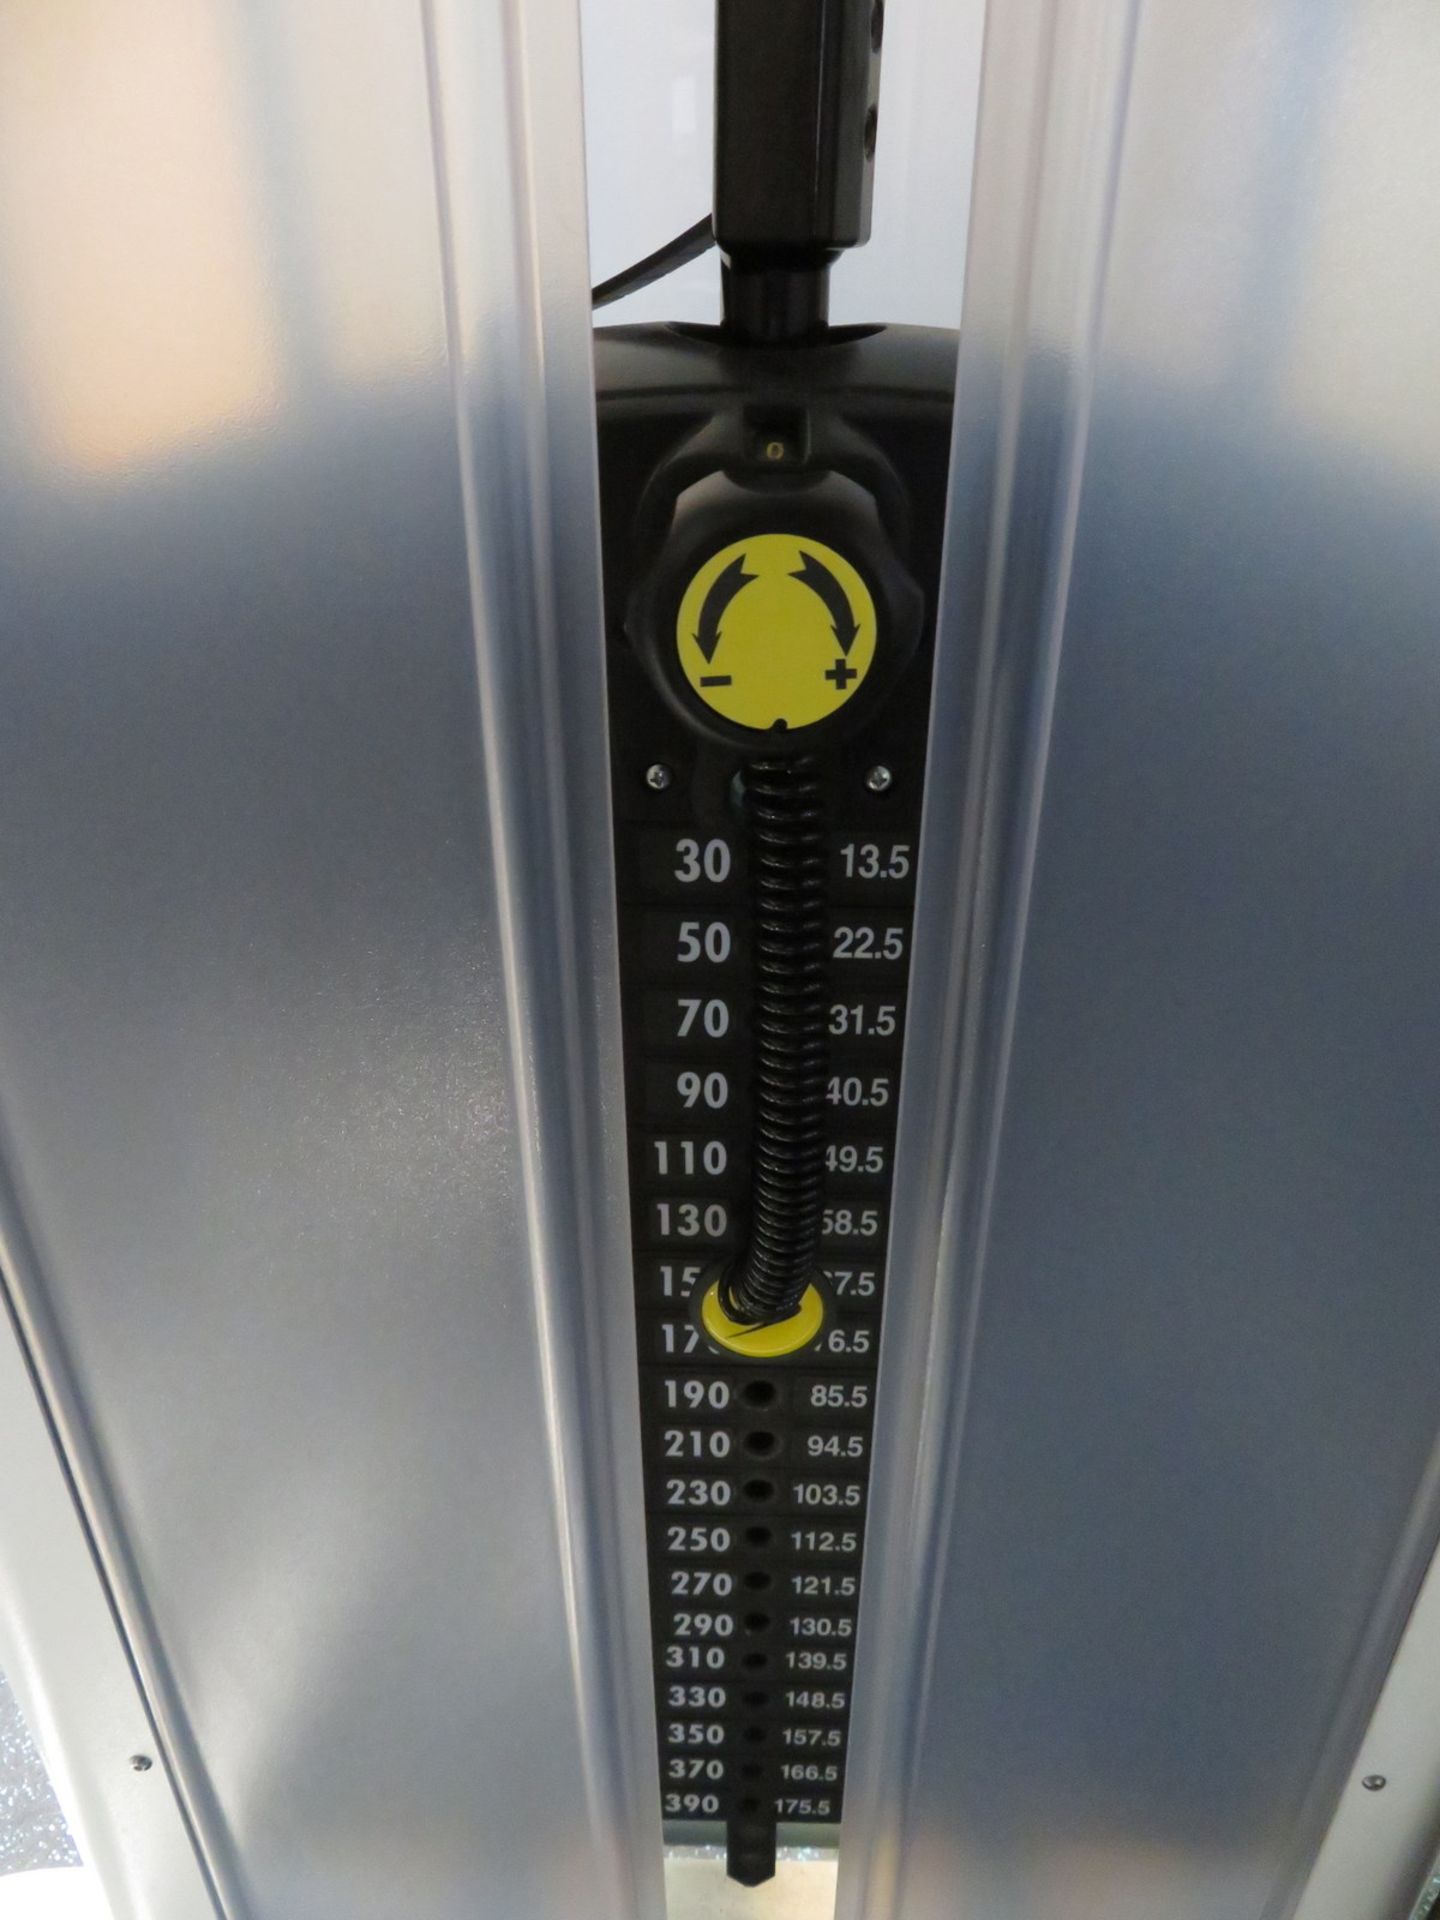 Cybex Leg Press: 12040. 175.5kg Weight Stack. Dimensions: 110x130x160cm (LxDxH) - Image 6 of 8